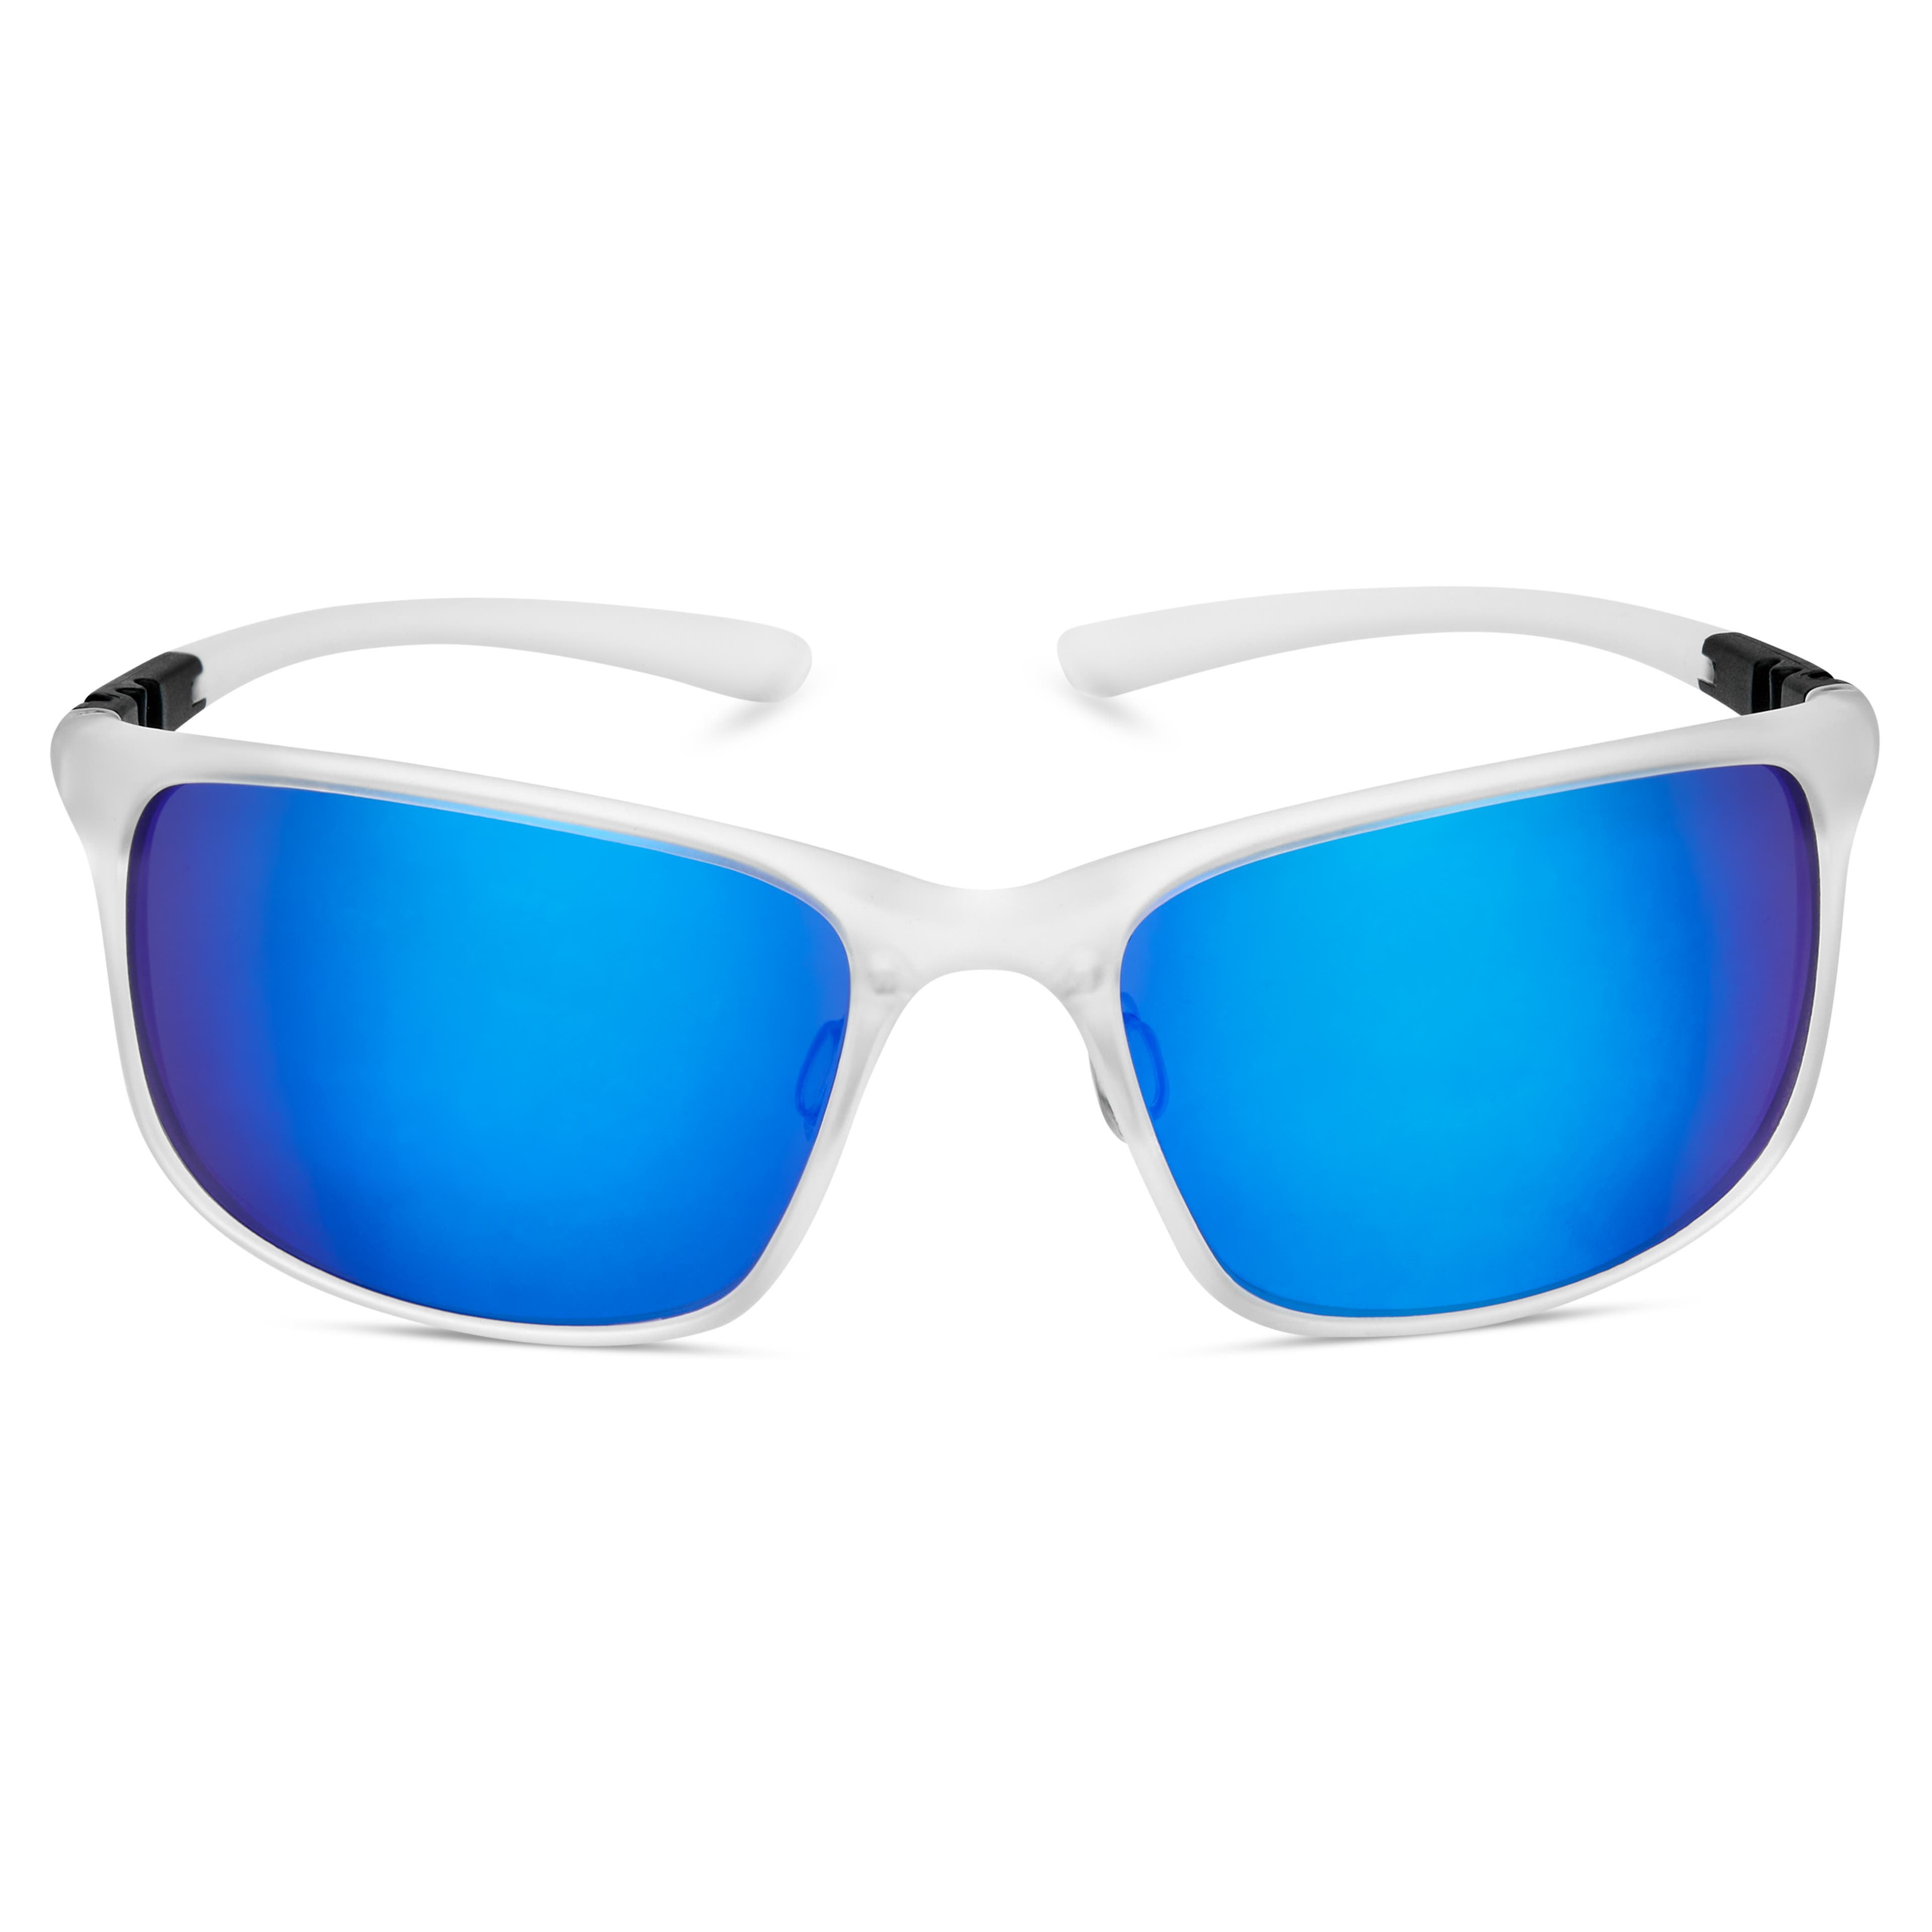 Clear & Blue Sport Sunglasses, In stock!